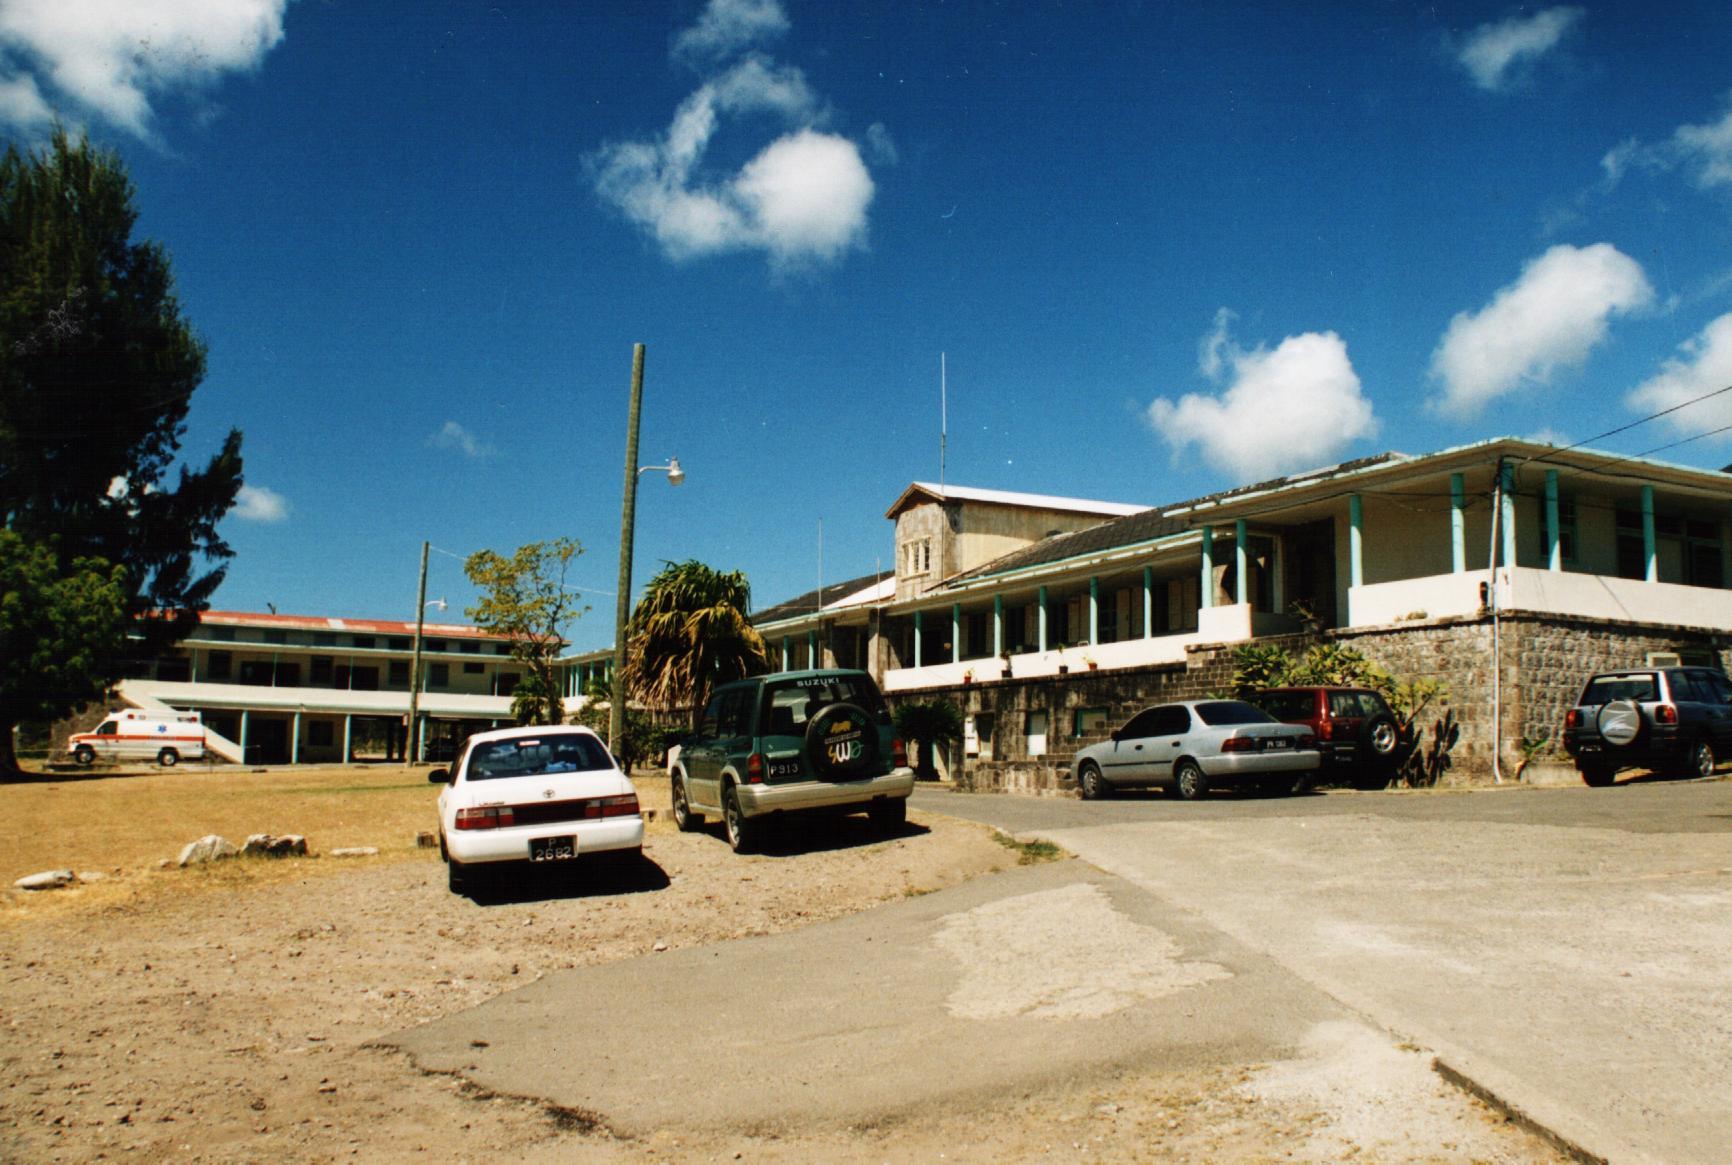 Hospital Development